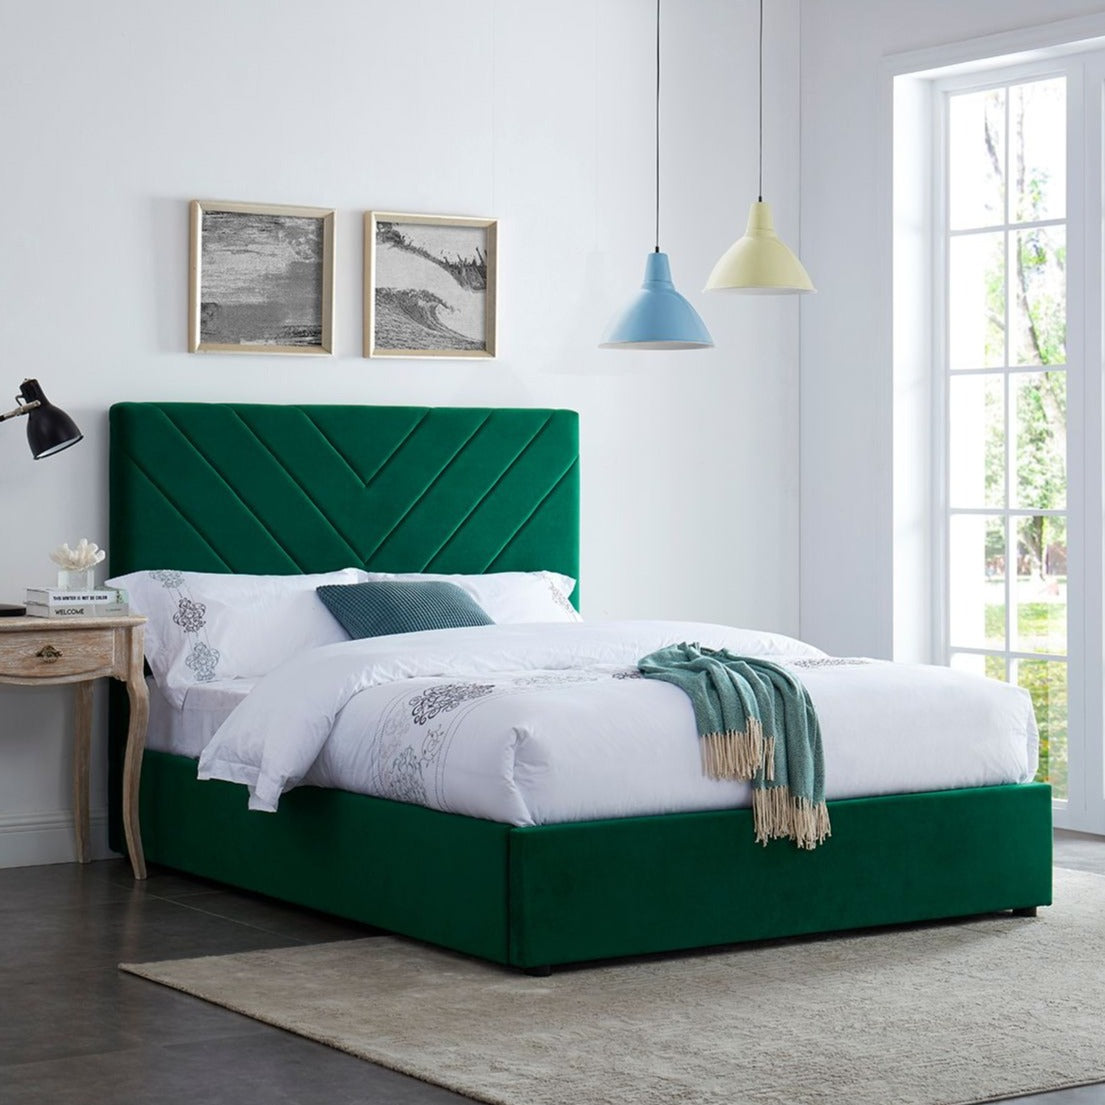 Green velvet bed frame with v shape stitched detail headboard.